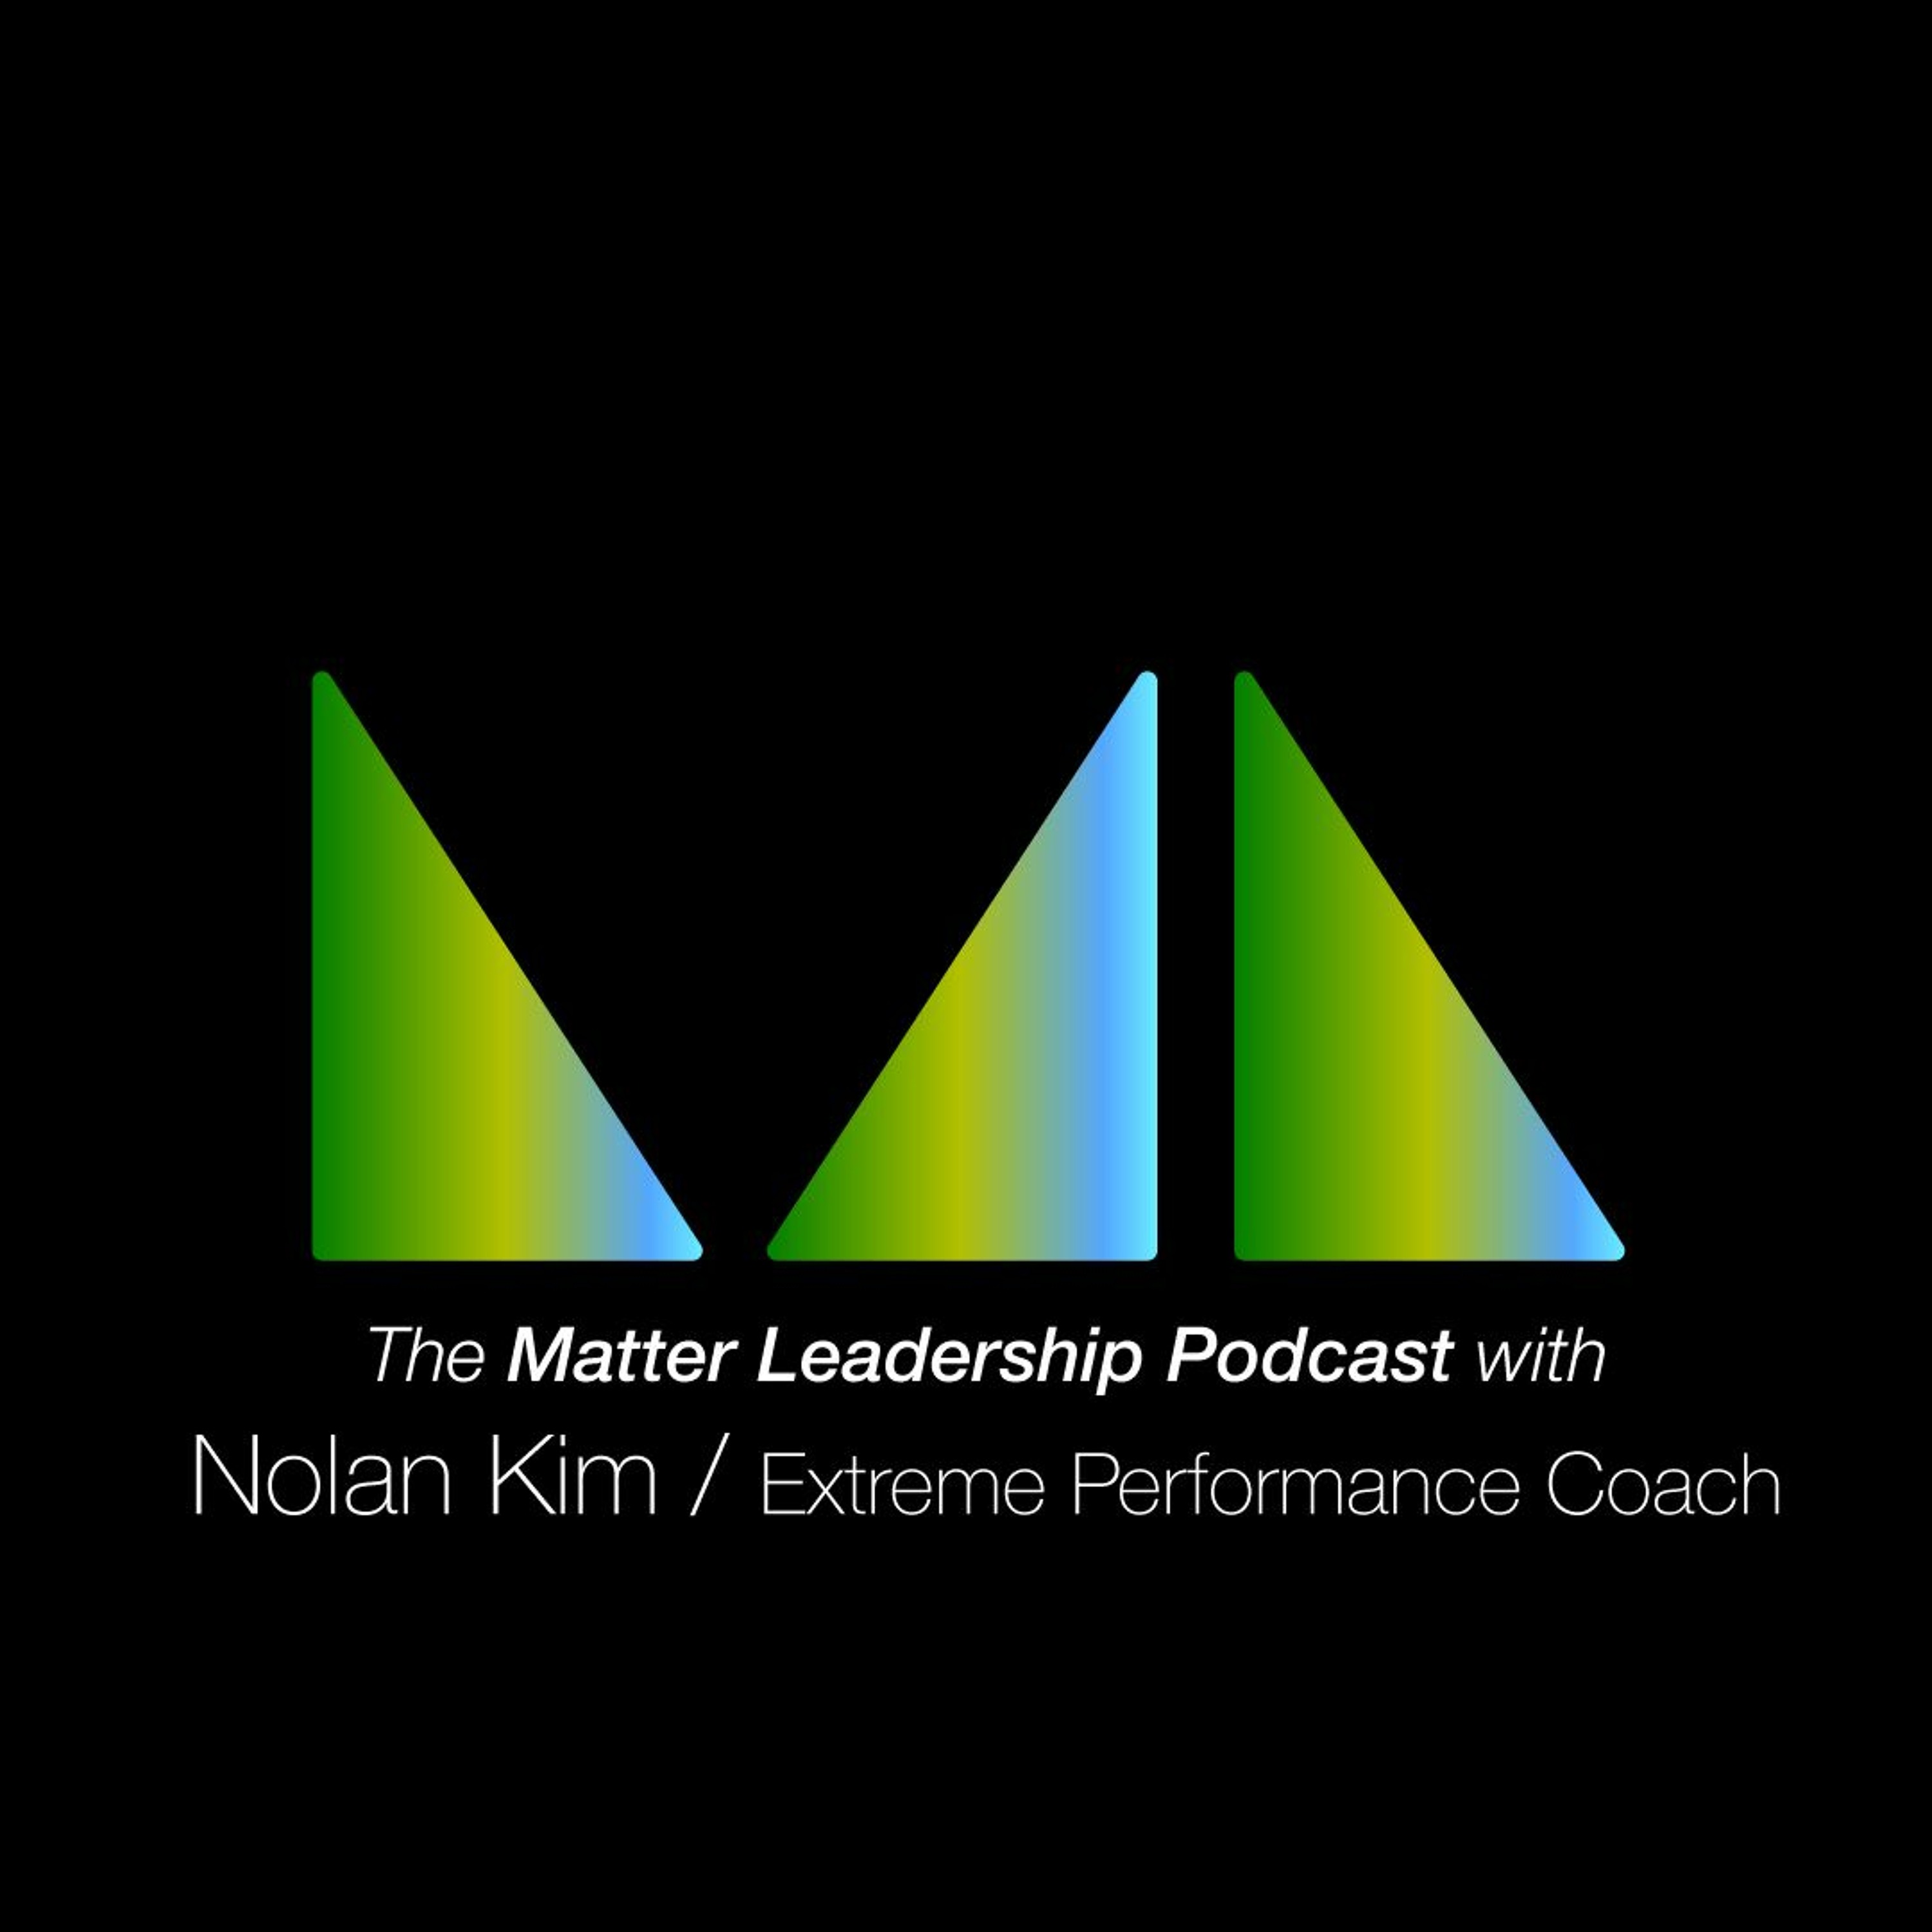 The Matter Leadership Podcast: Nolan Kim / Extreme Performance Coach